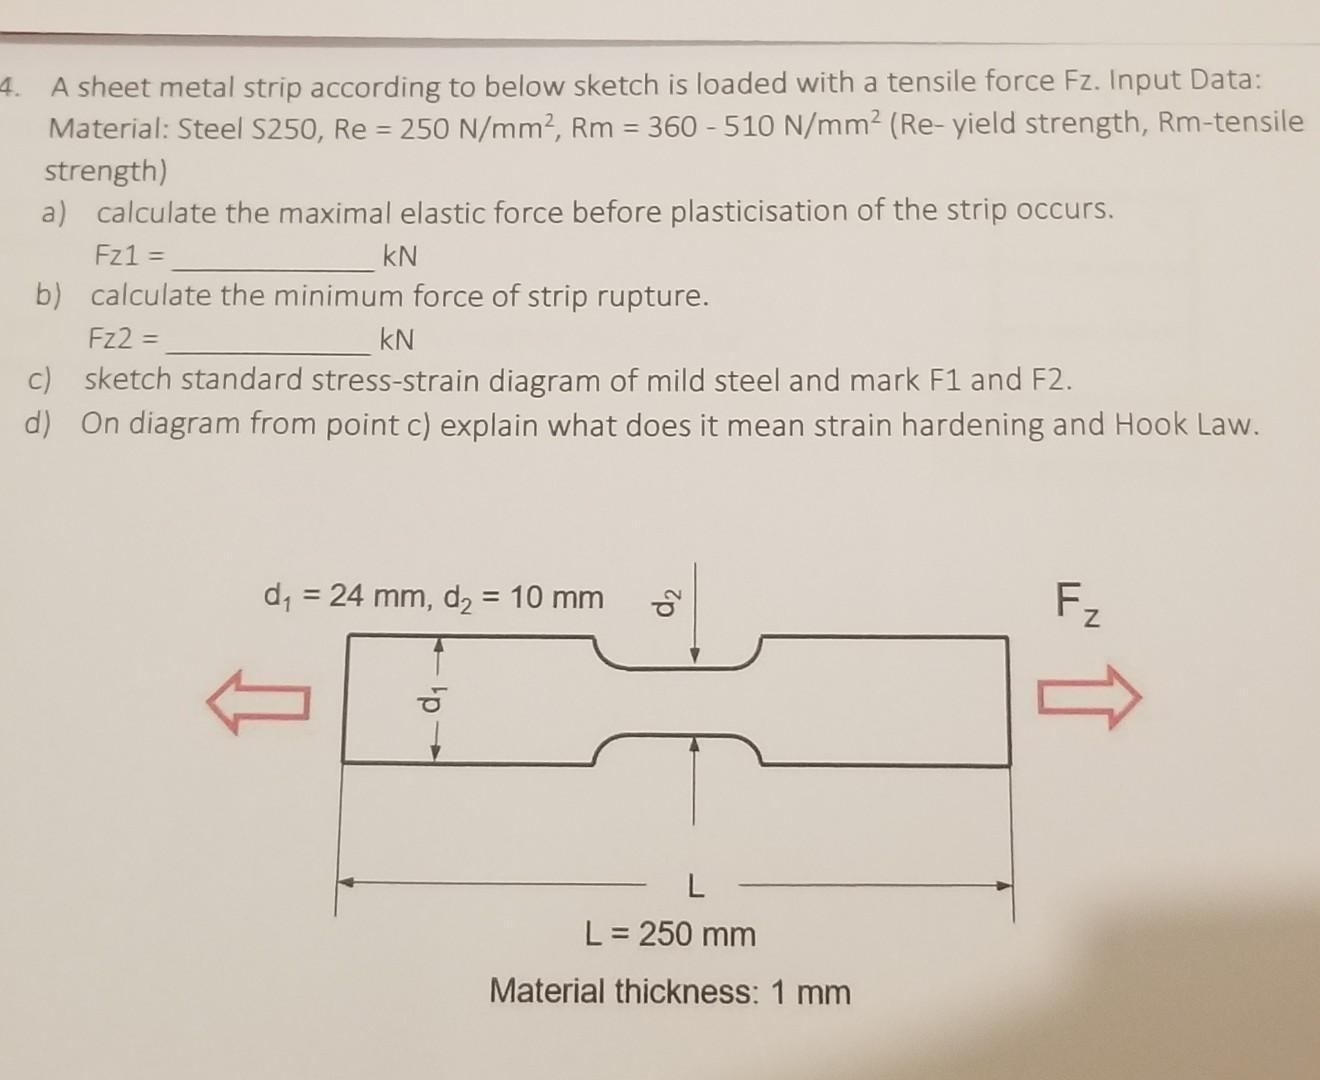 Tensile strength Rm [N/mm2]